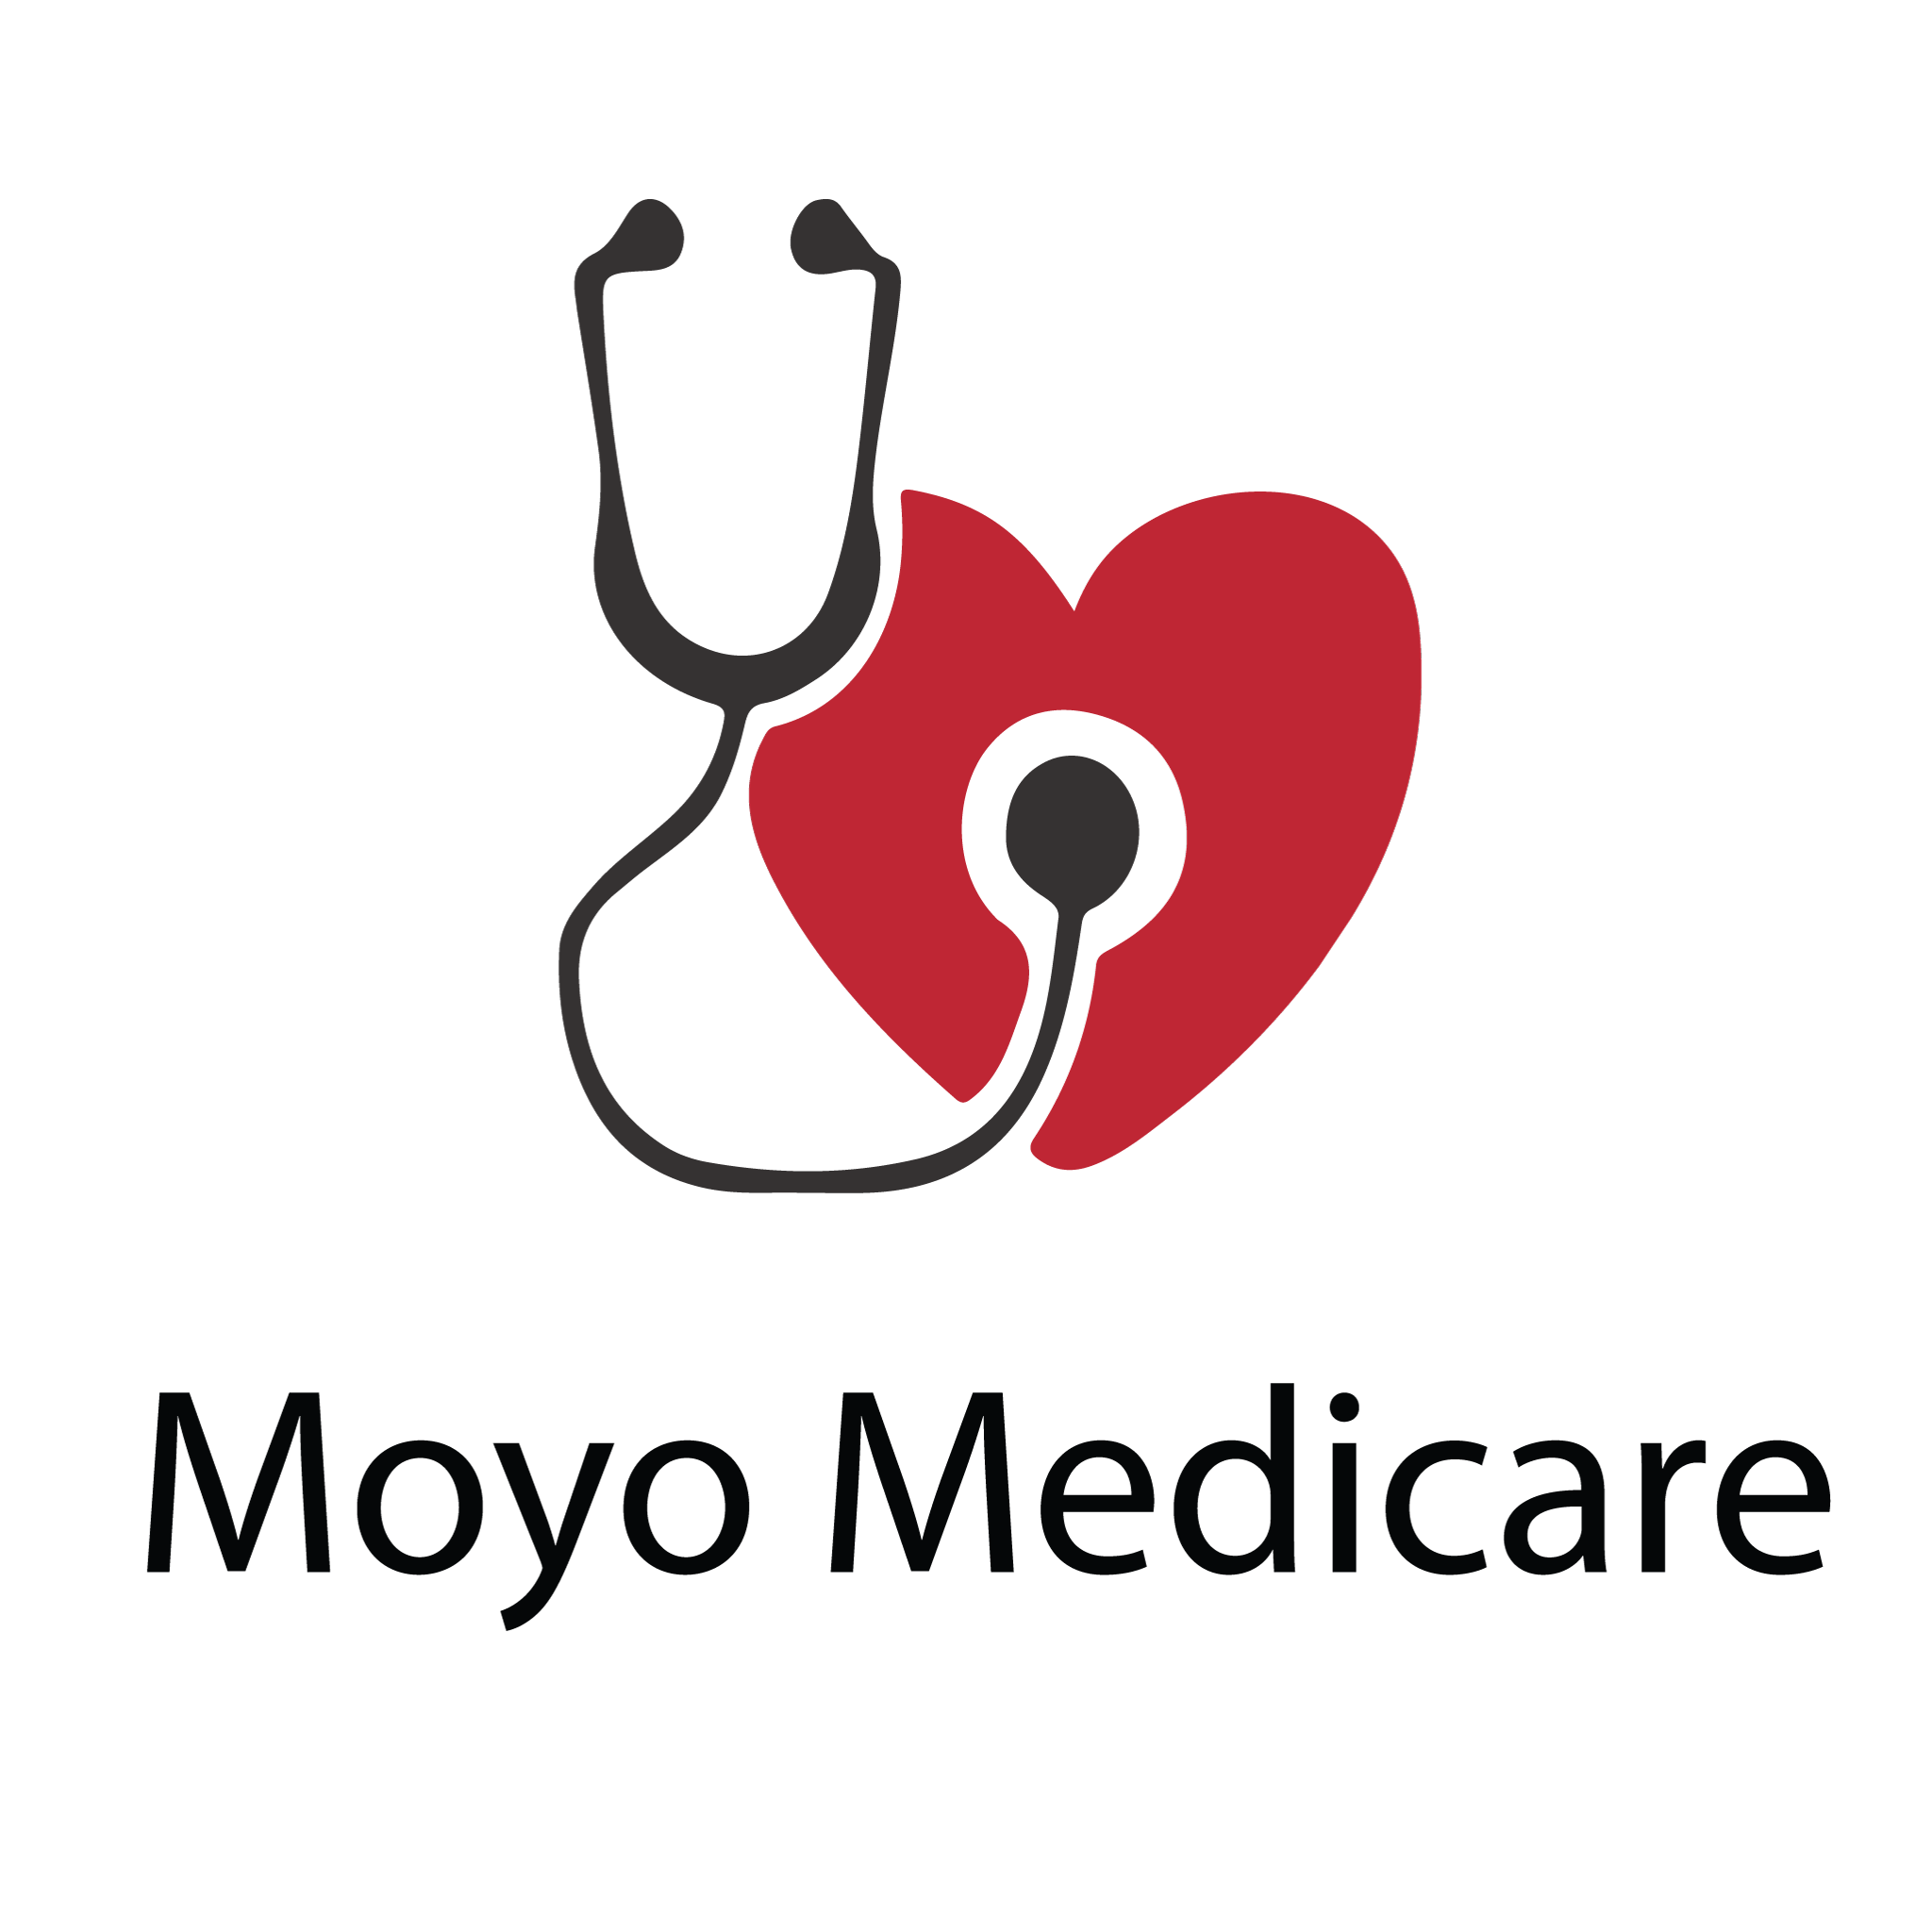 Moyo Hospital